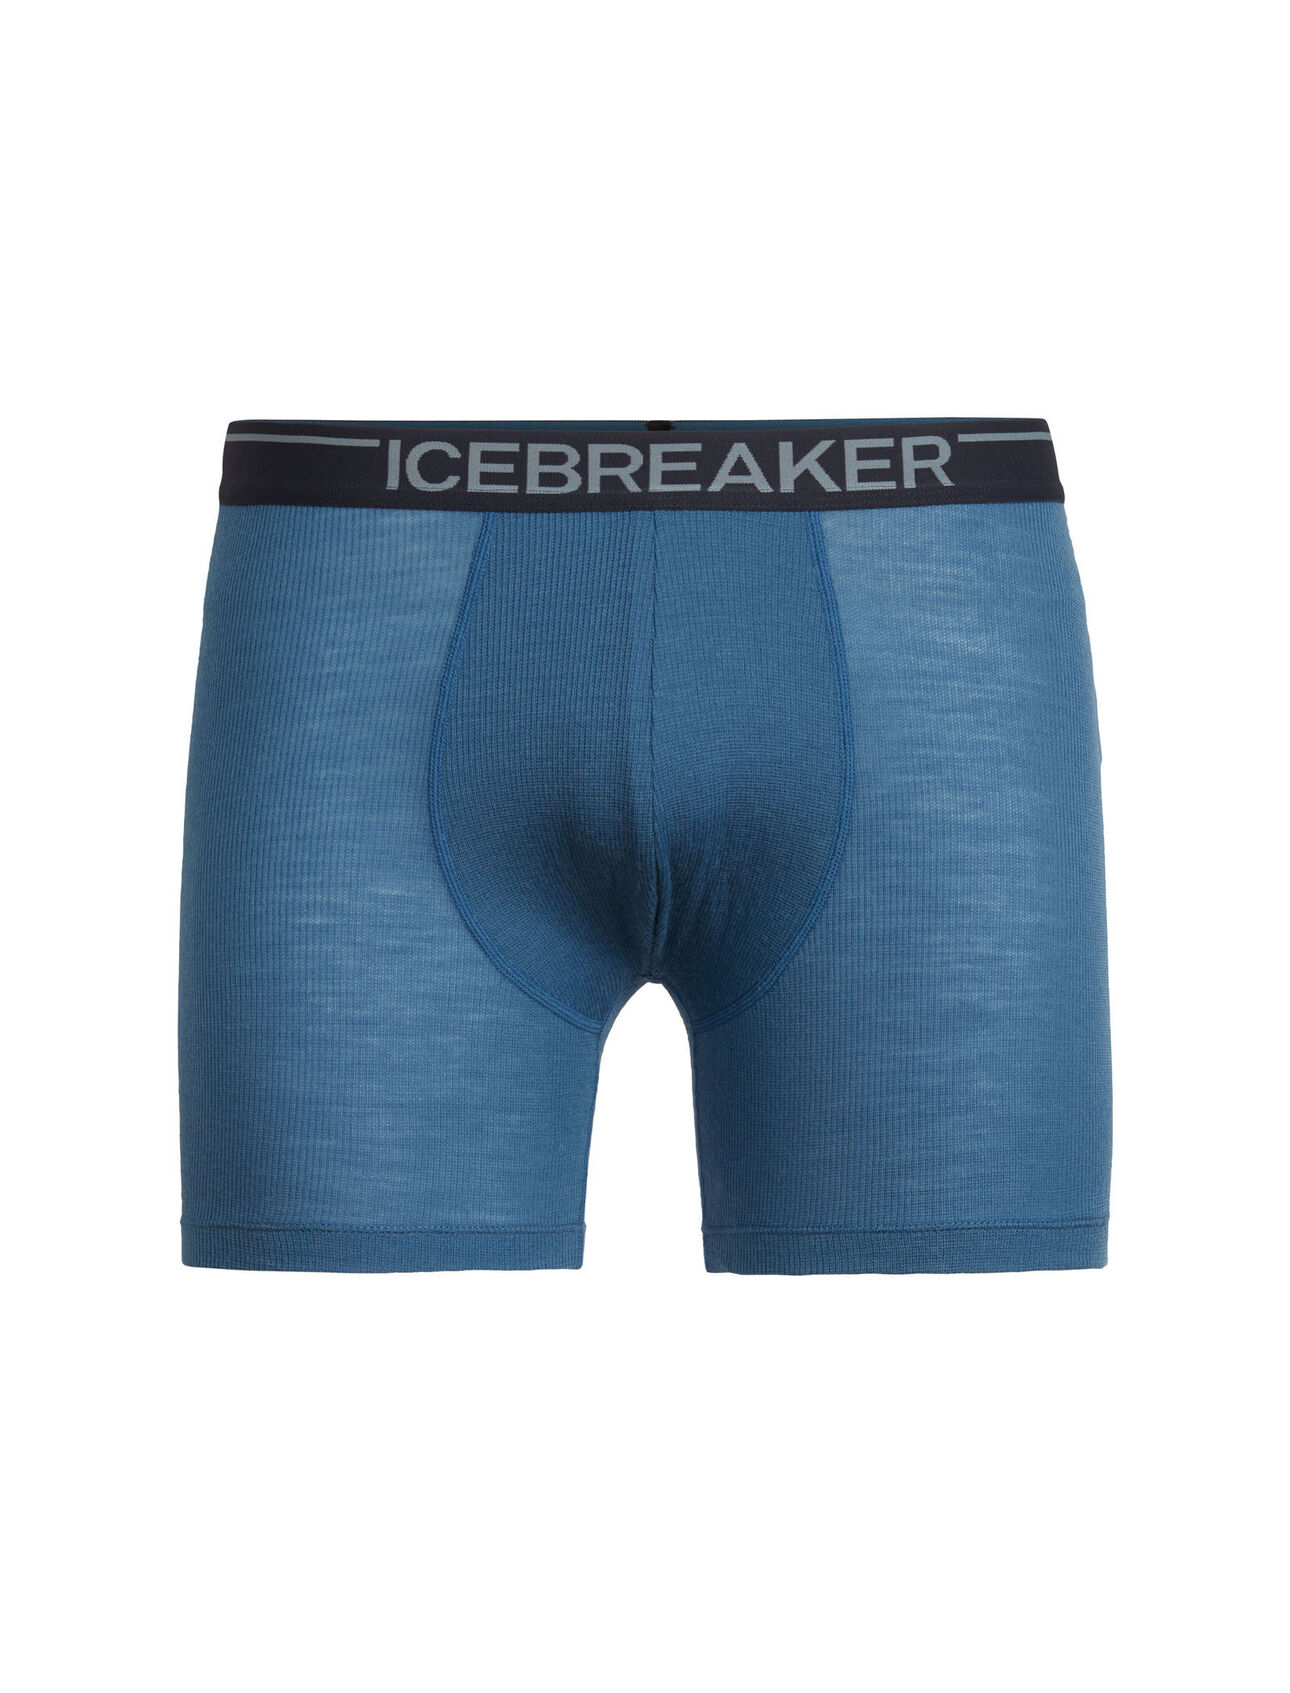 Anatomica Rib Boxers - Icebreaker (US)